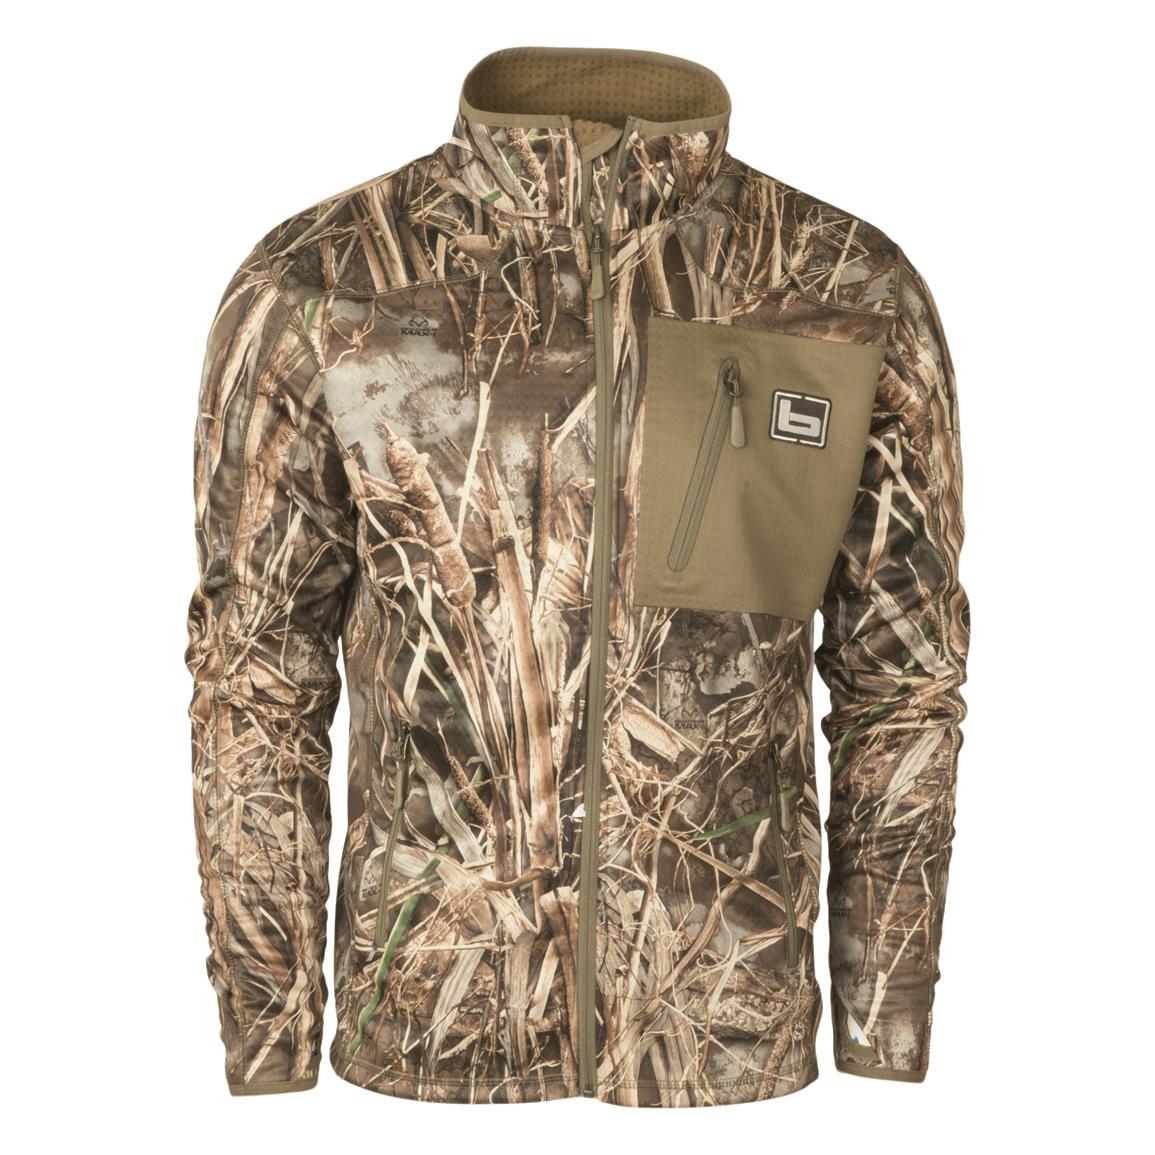 Banded Mid-layer Full-Zip Fleece Jacket, Max 7